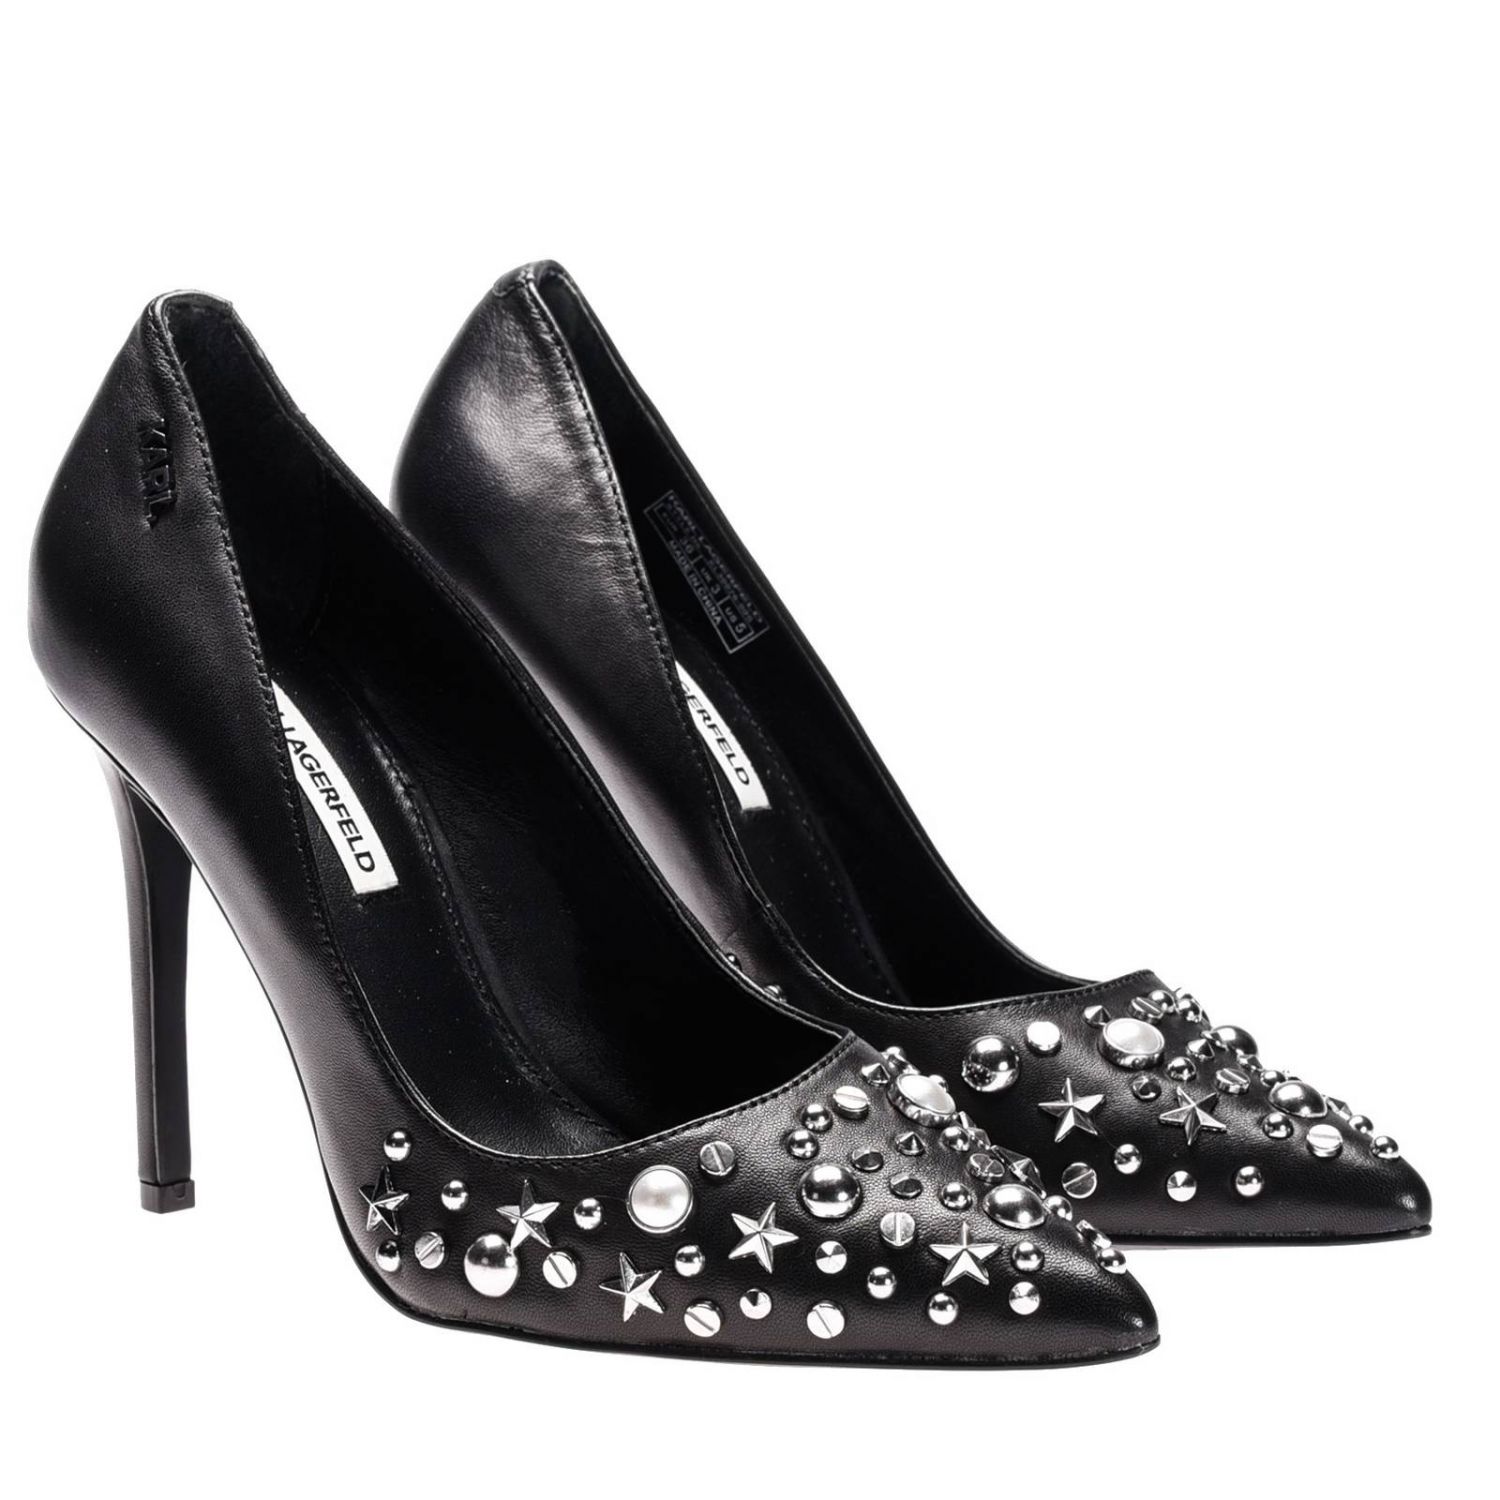 Karl Lagerfeld Outlet: Shoes women - Black | Pumps Karl Lagerfeld ...